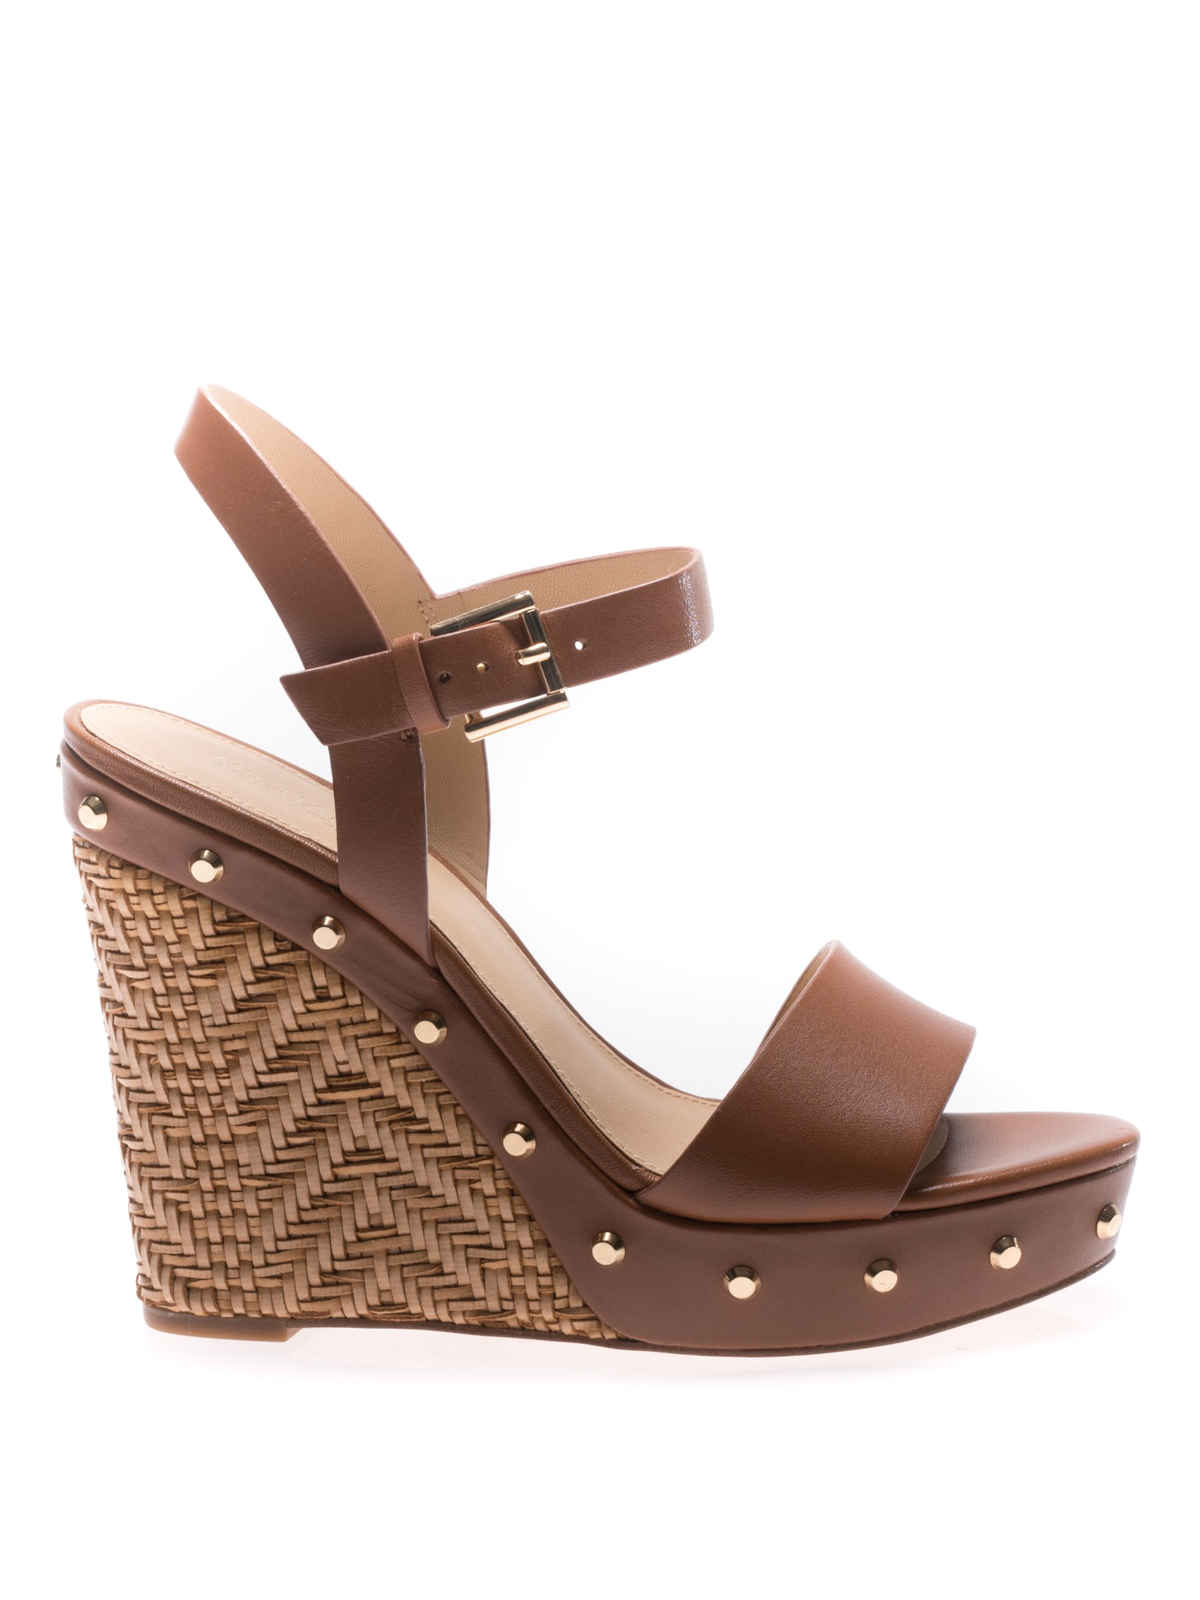 Sandals Michael Kors - Ellen brown leather wedge sandals - 40S8ELHS1L230